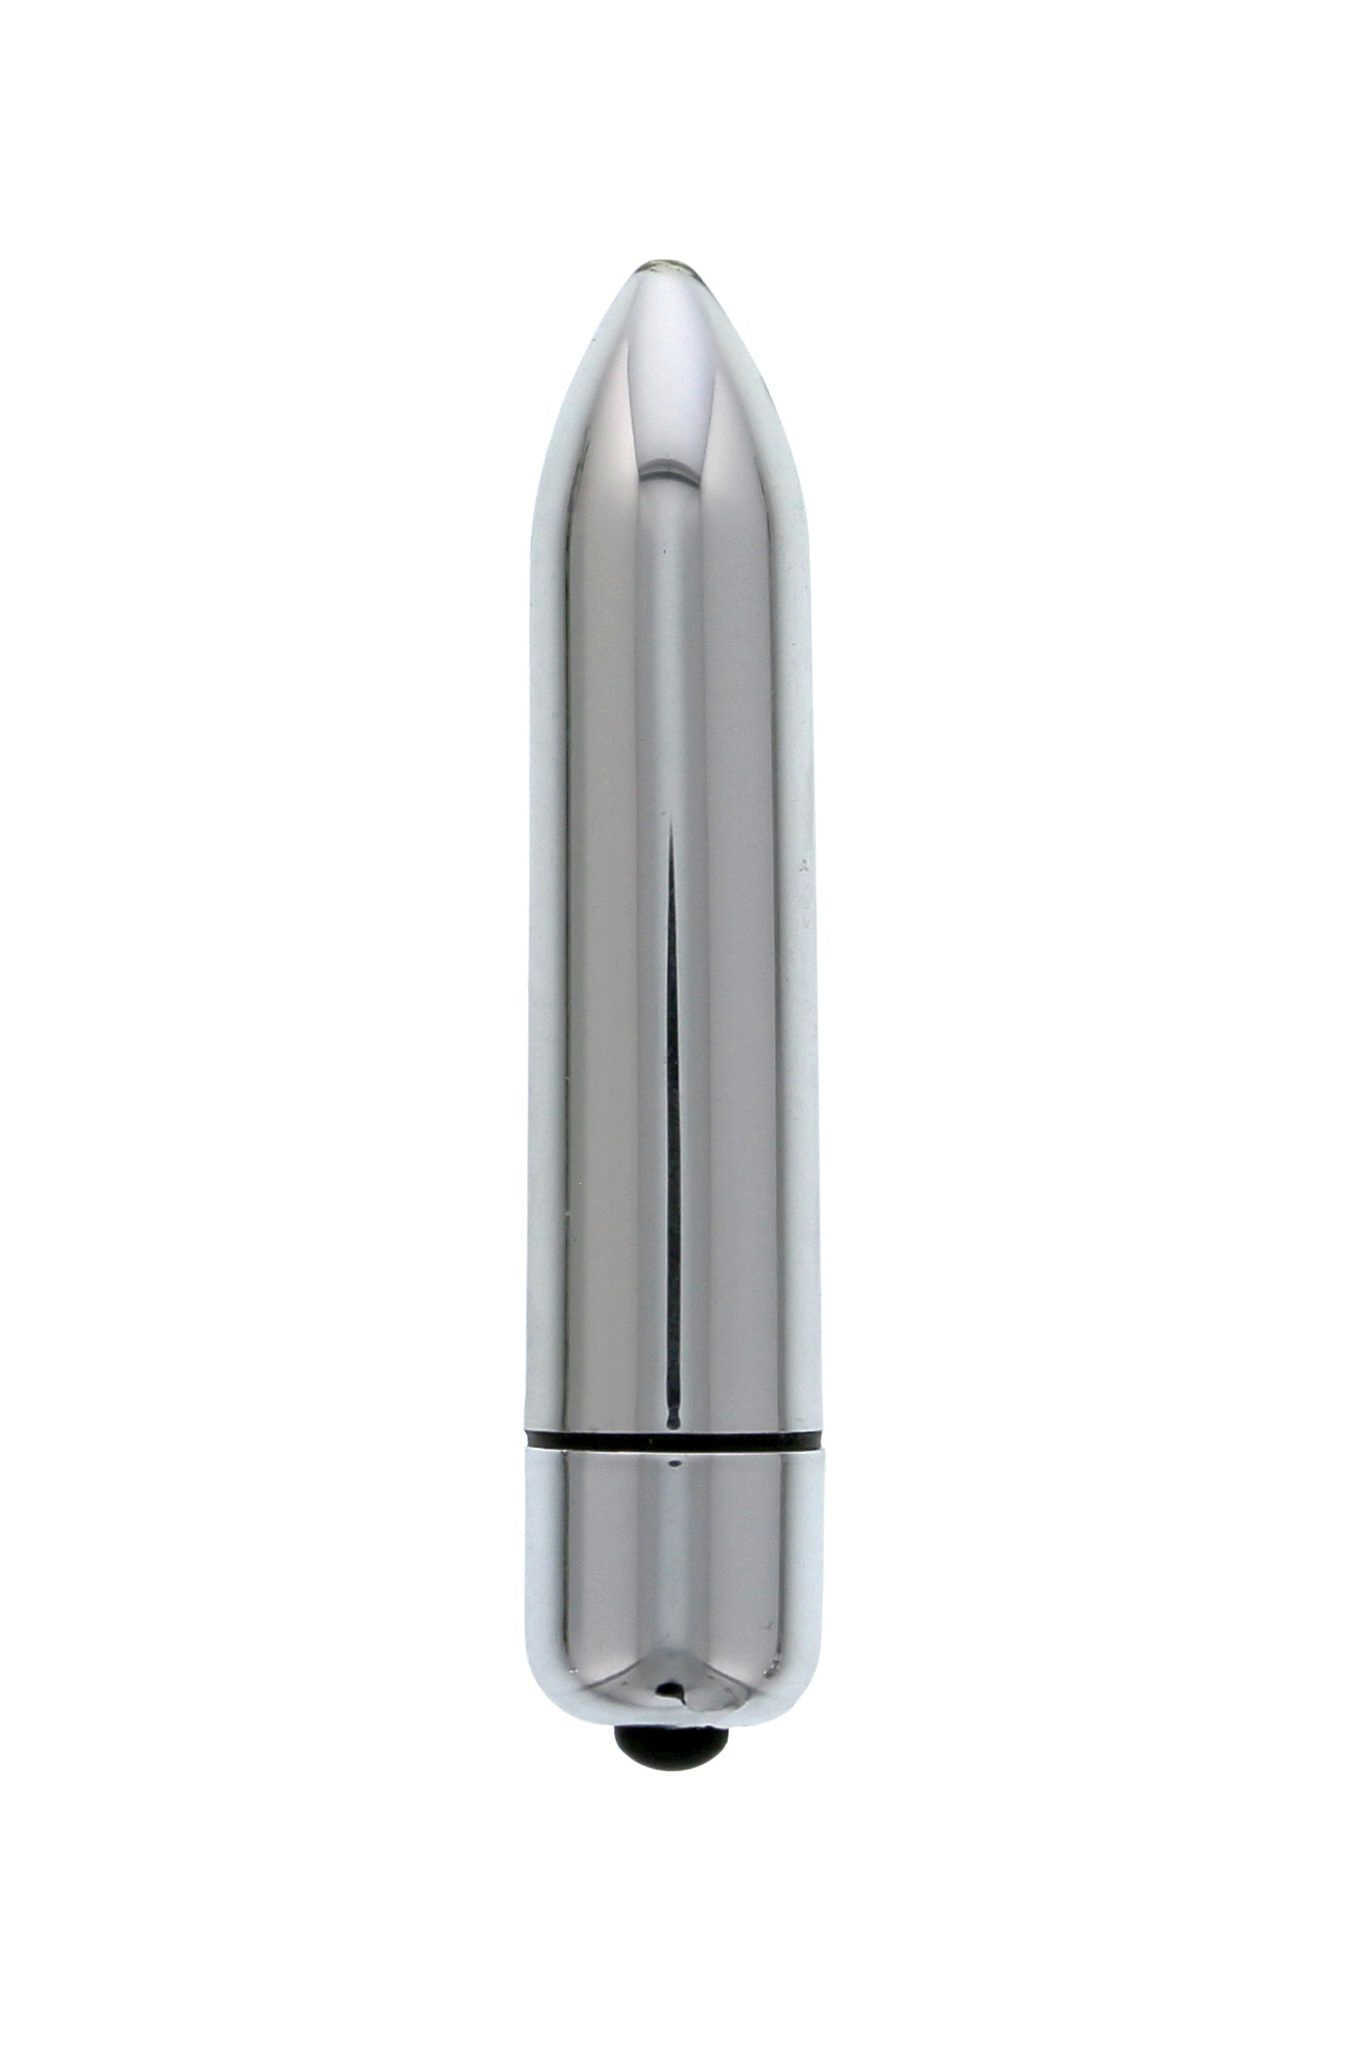 DreamToys Mini Vibrator Climax Bullet